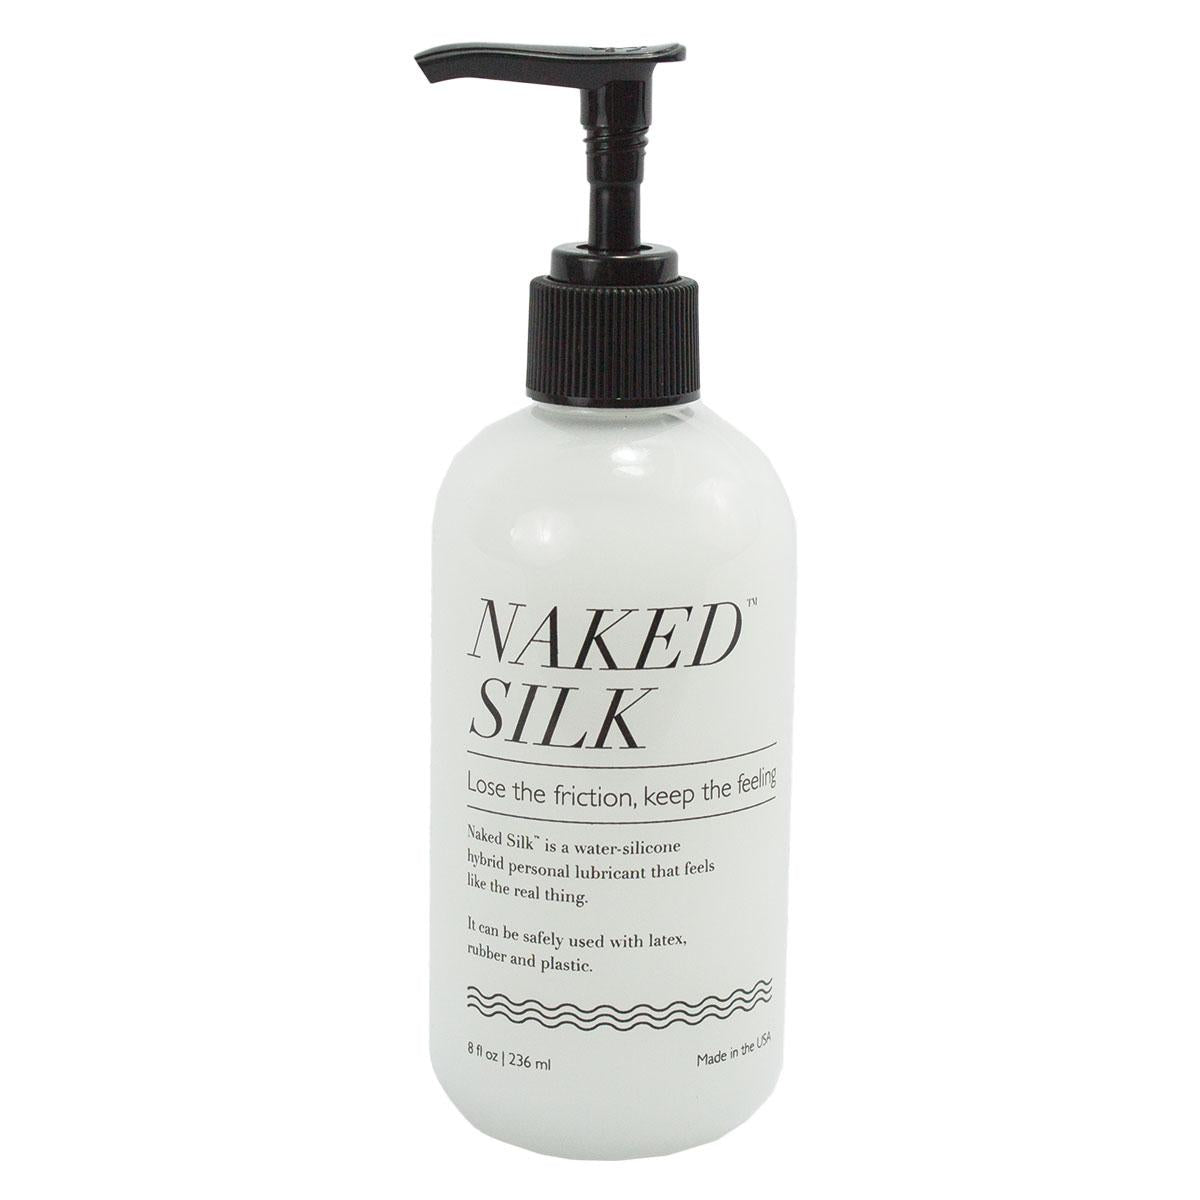 Naked Silk 8.7oz